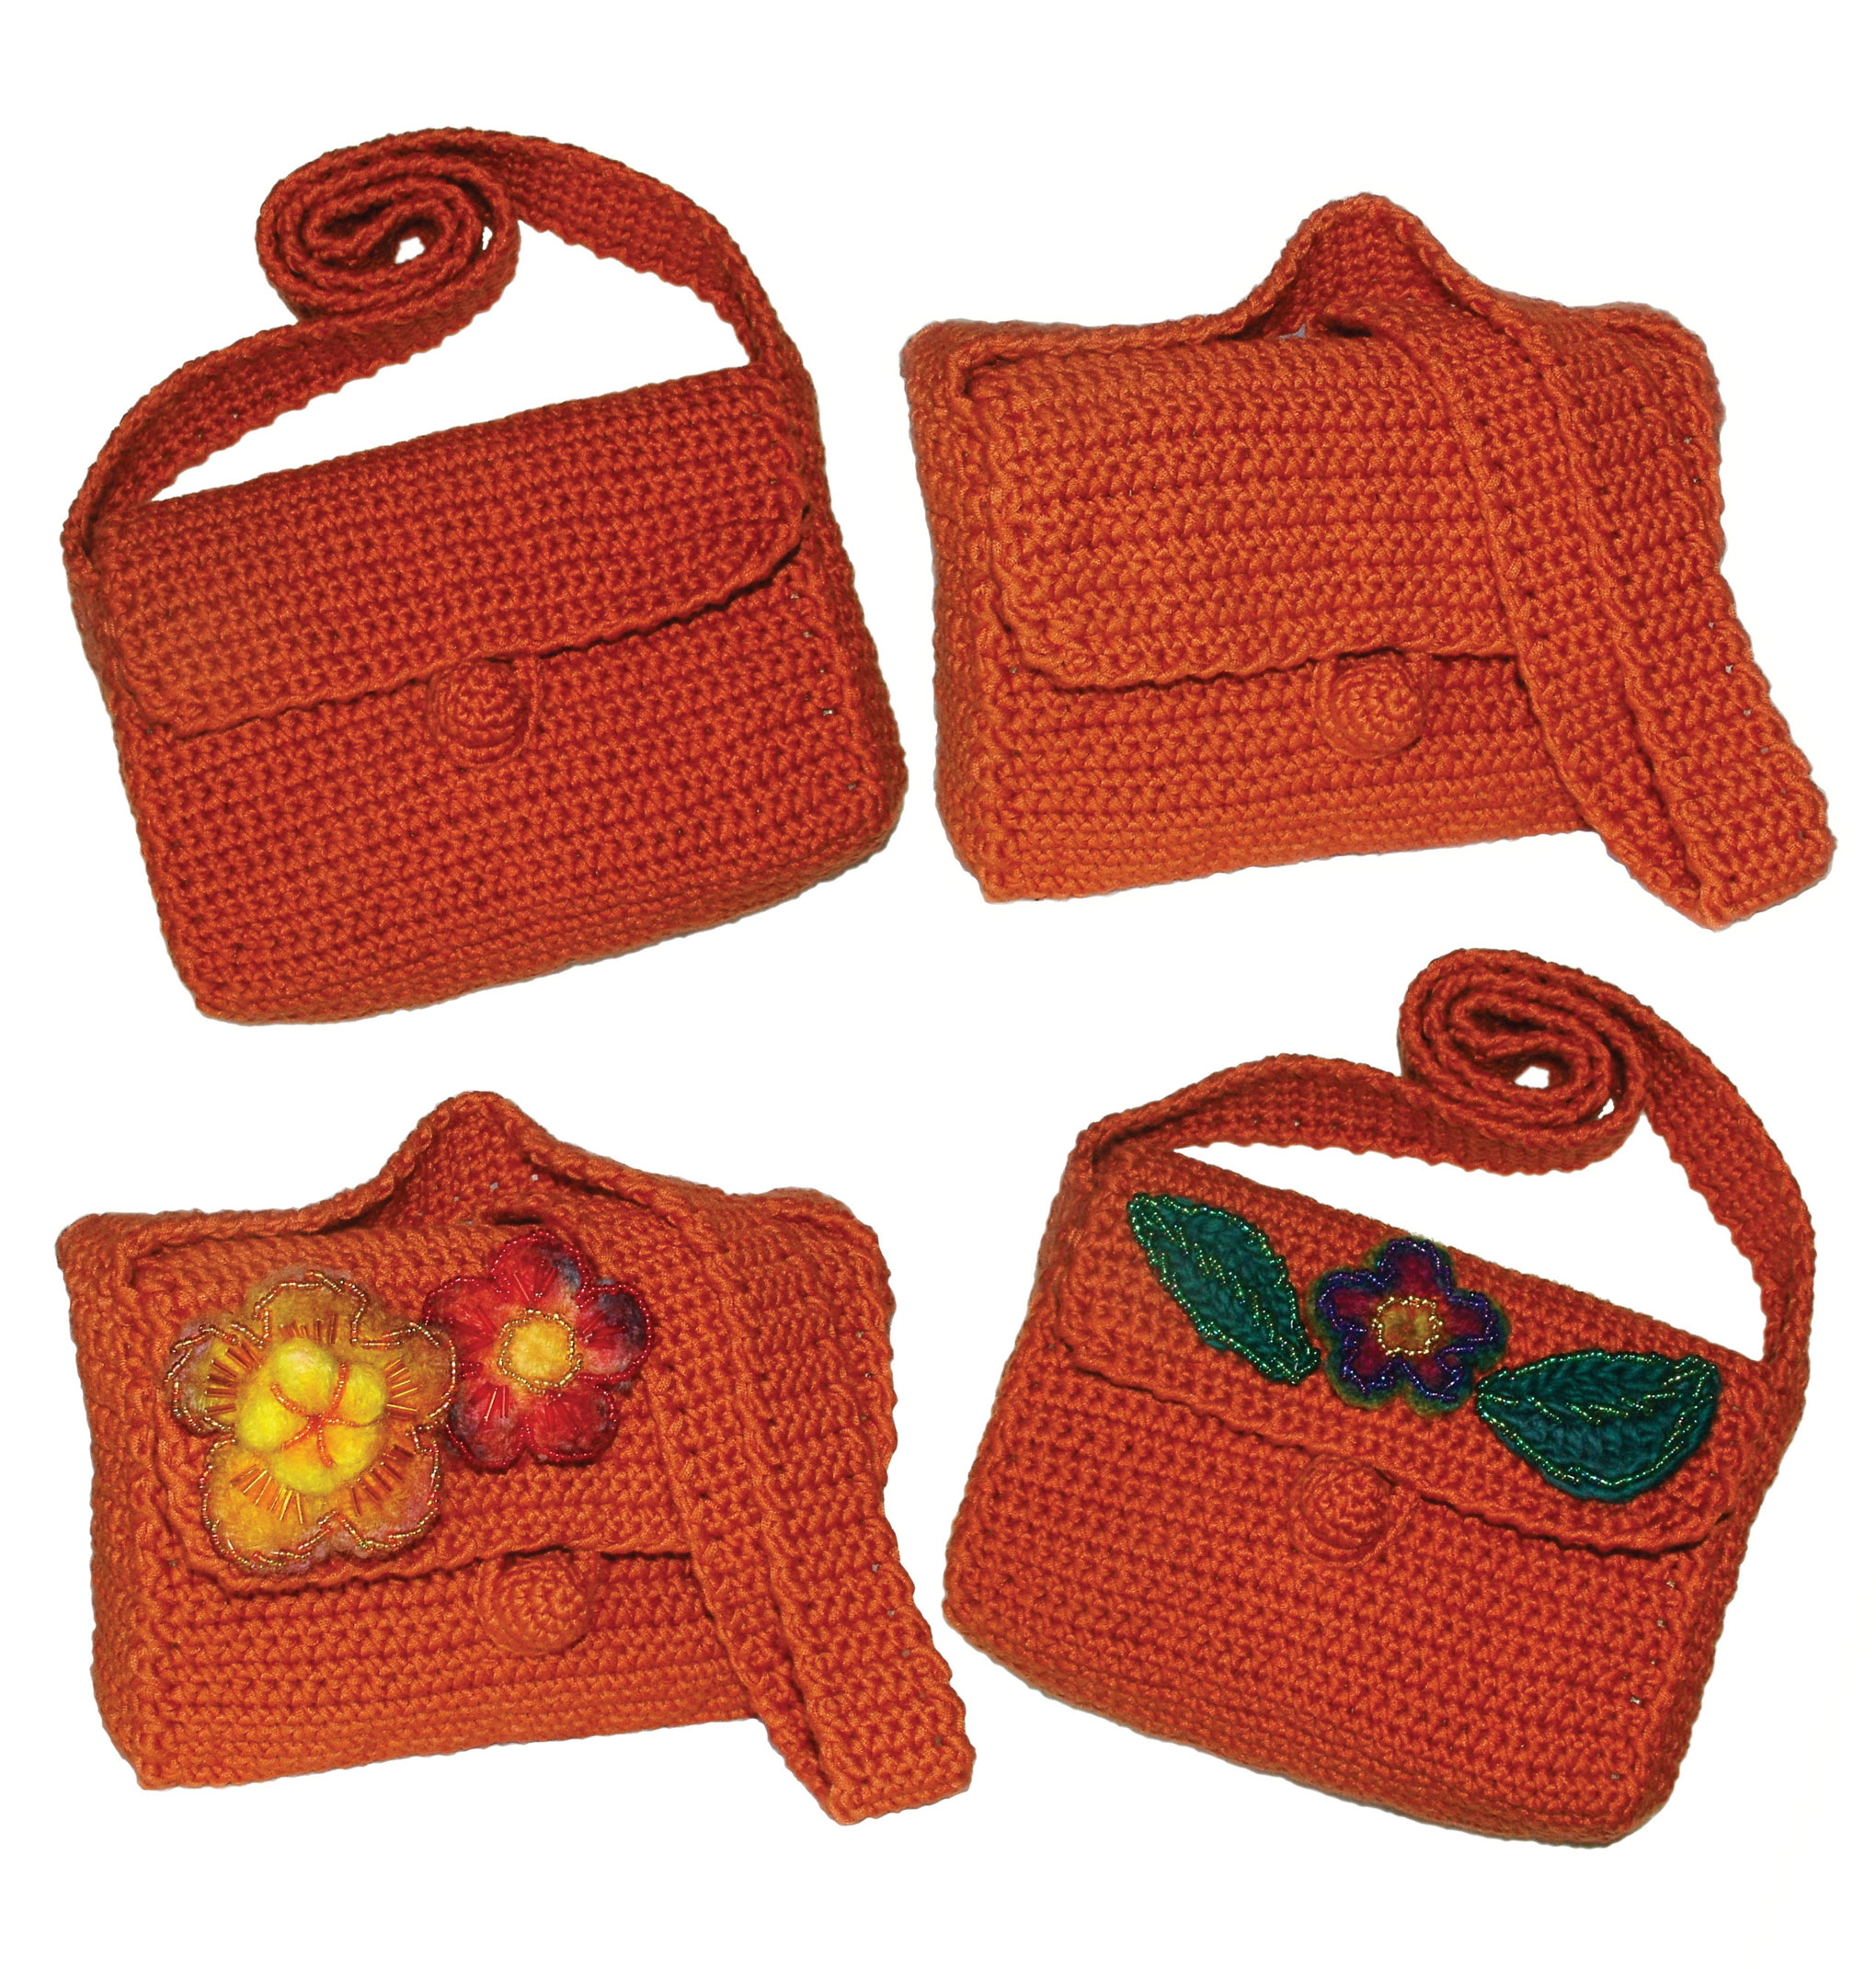 Crochet Bags | FaveCrafts.com - Christmas Crafts, Free Knitting